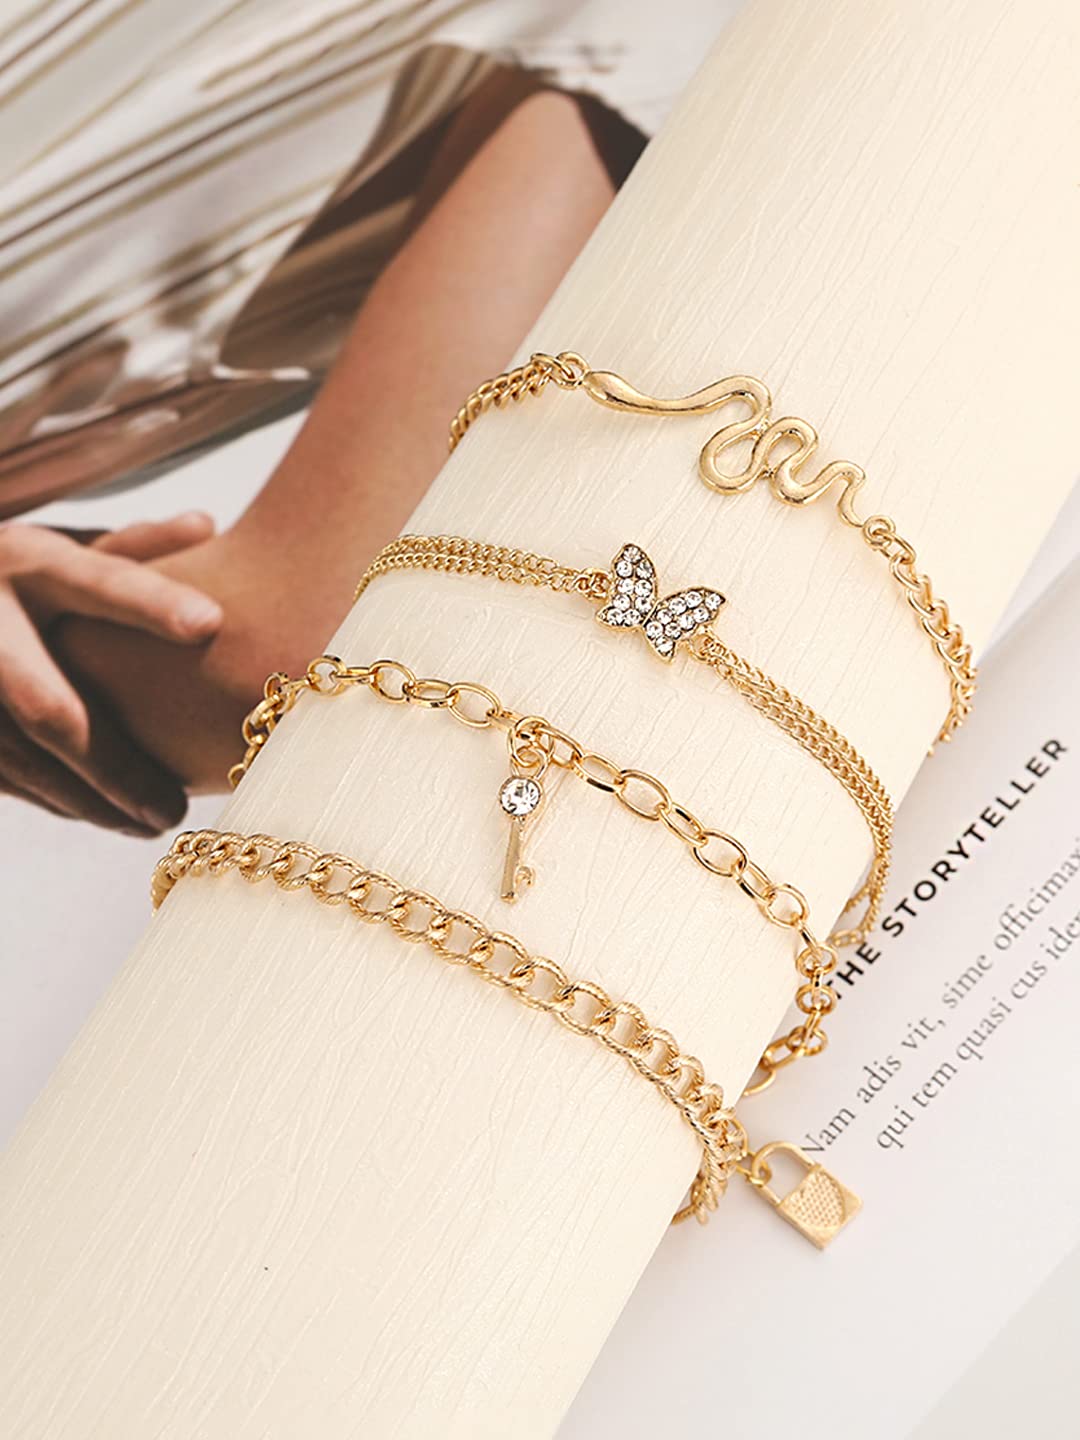 Charlie & Co. Jewelry | 14K Gold Hanging Crosses Bracelet Model-AB775